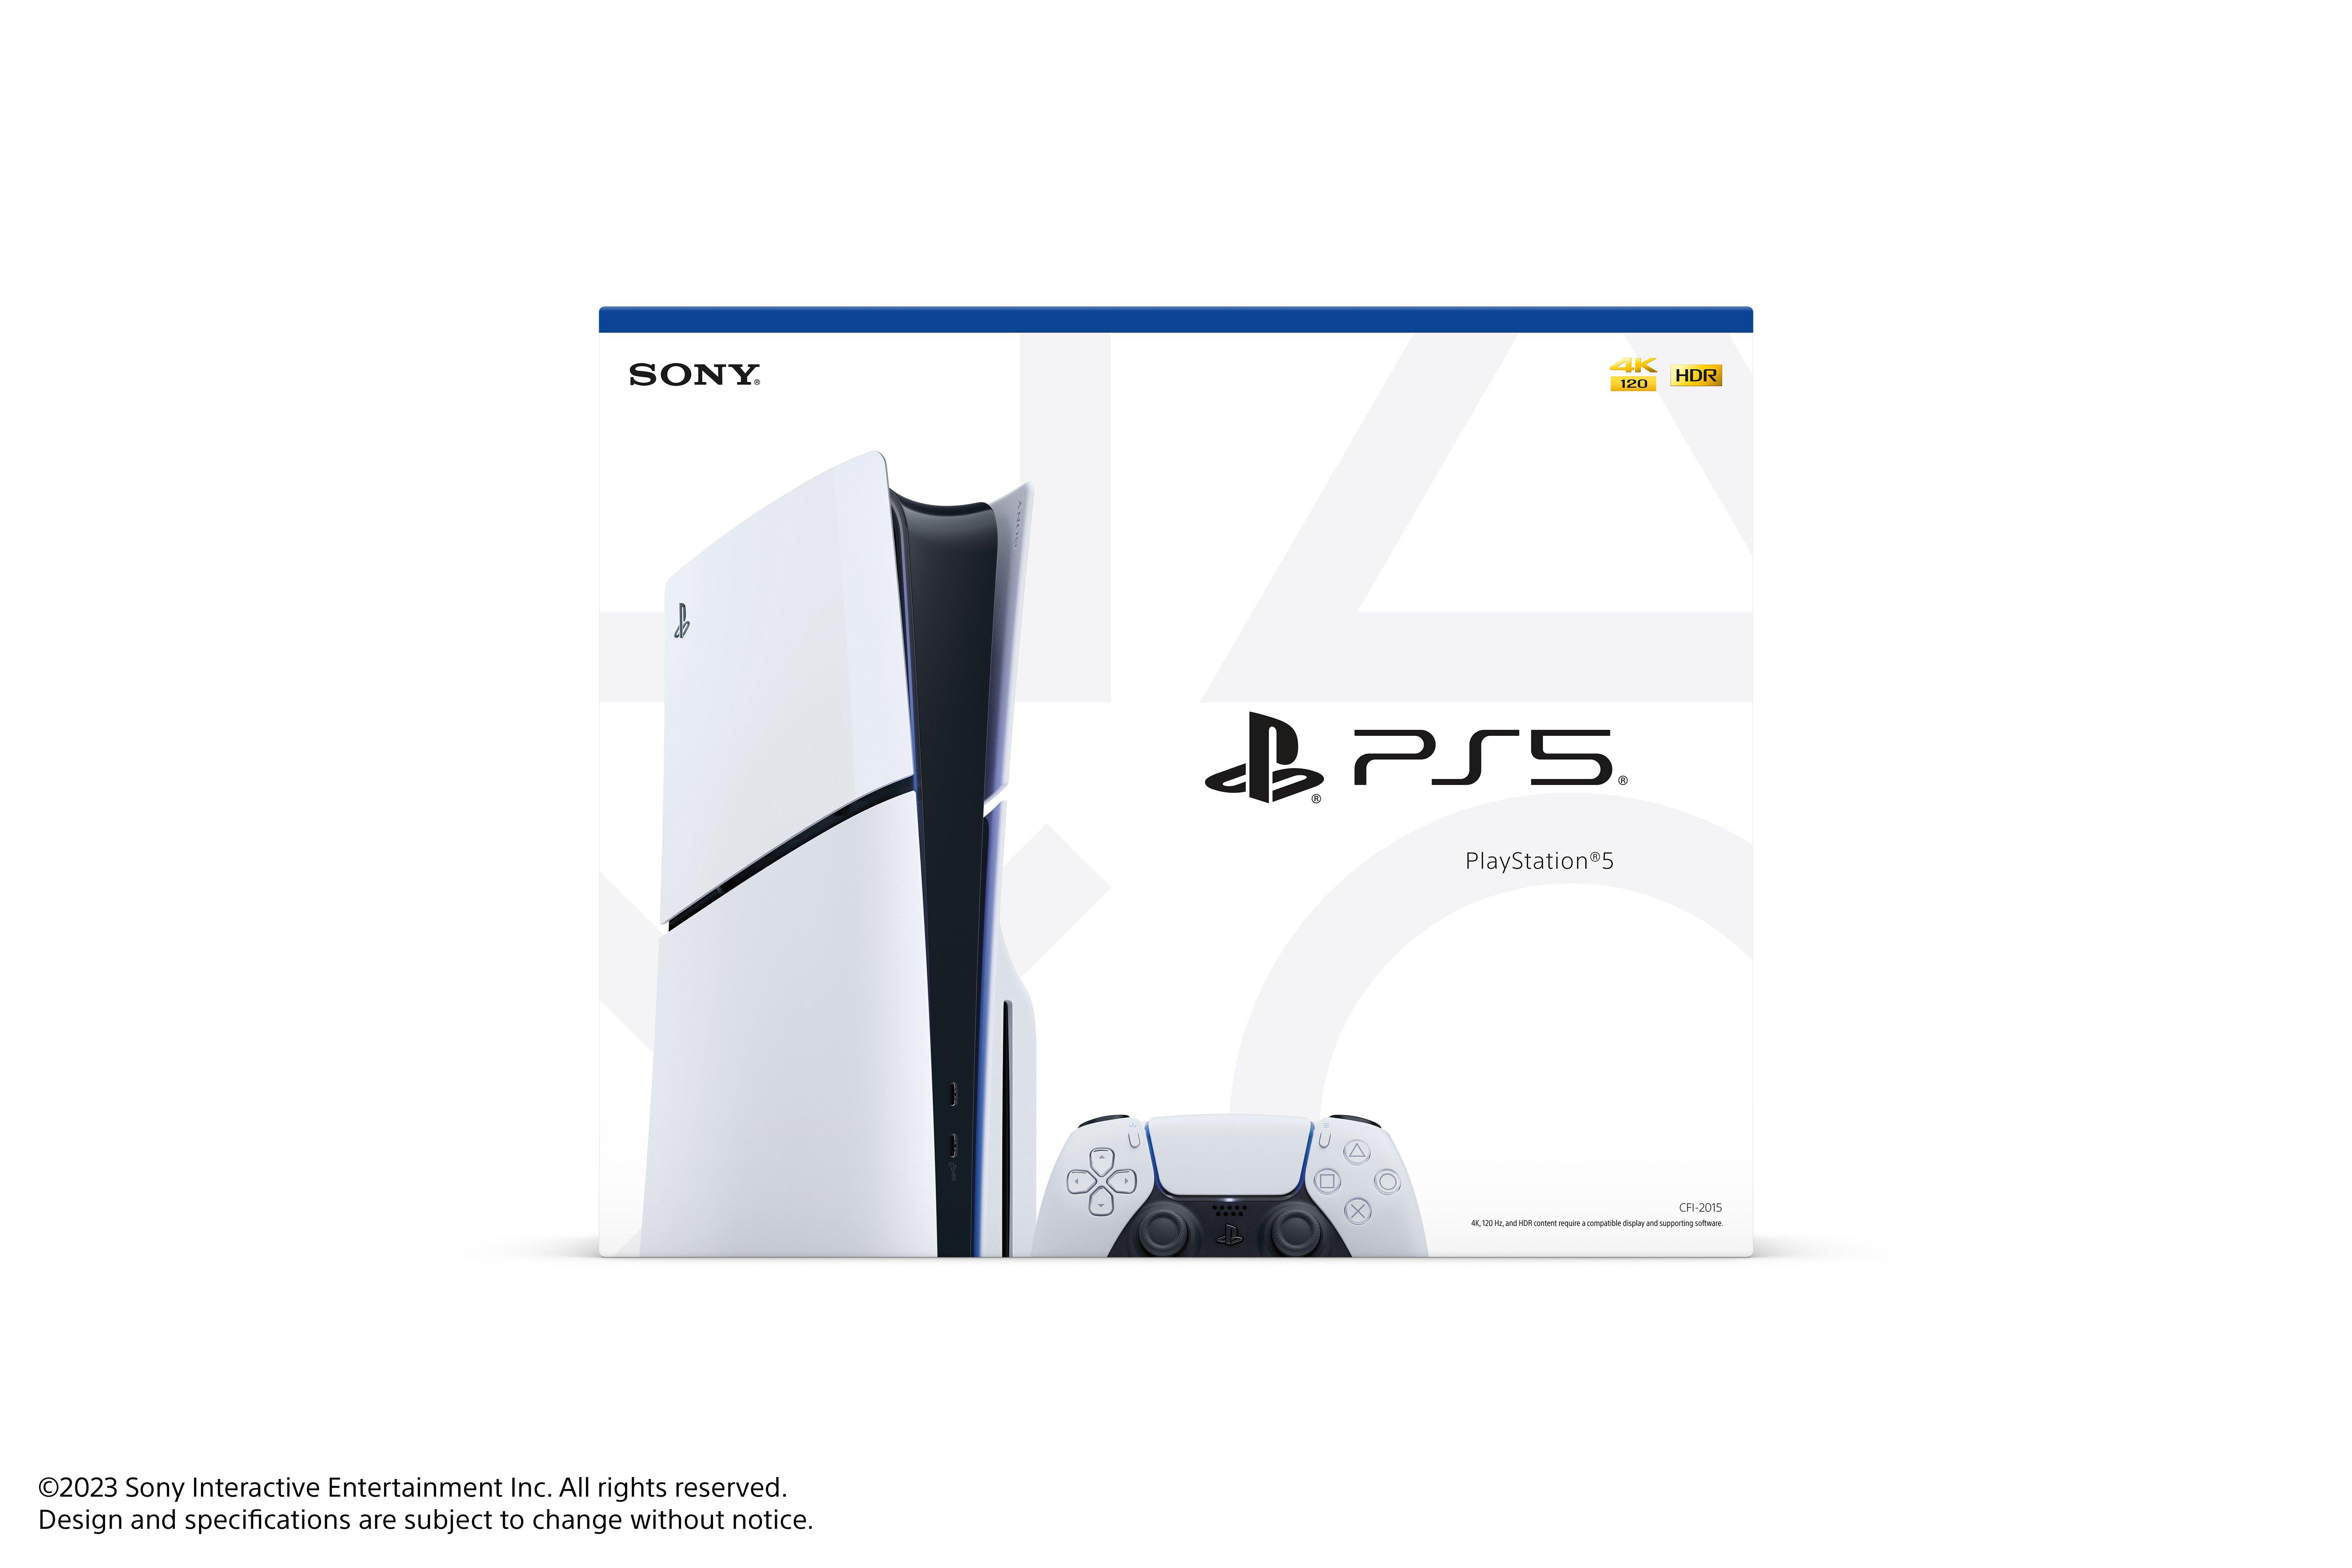  PlayStation®5 Digital Edition (slim) : Video Games